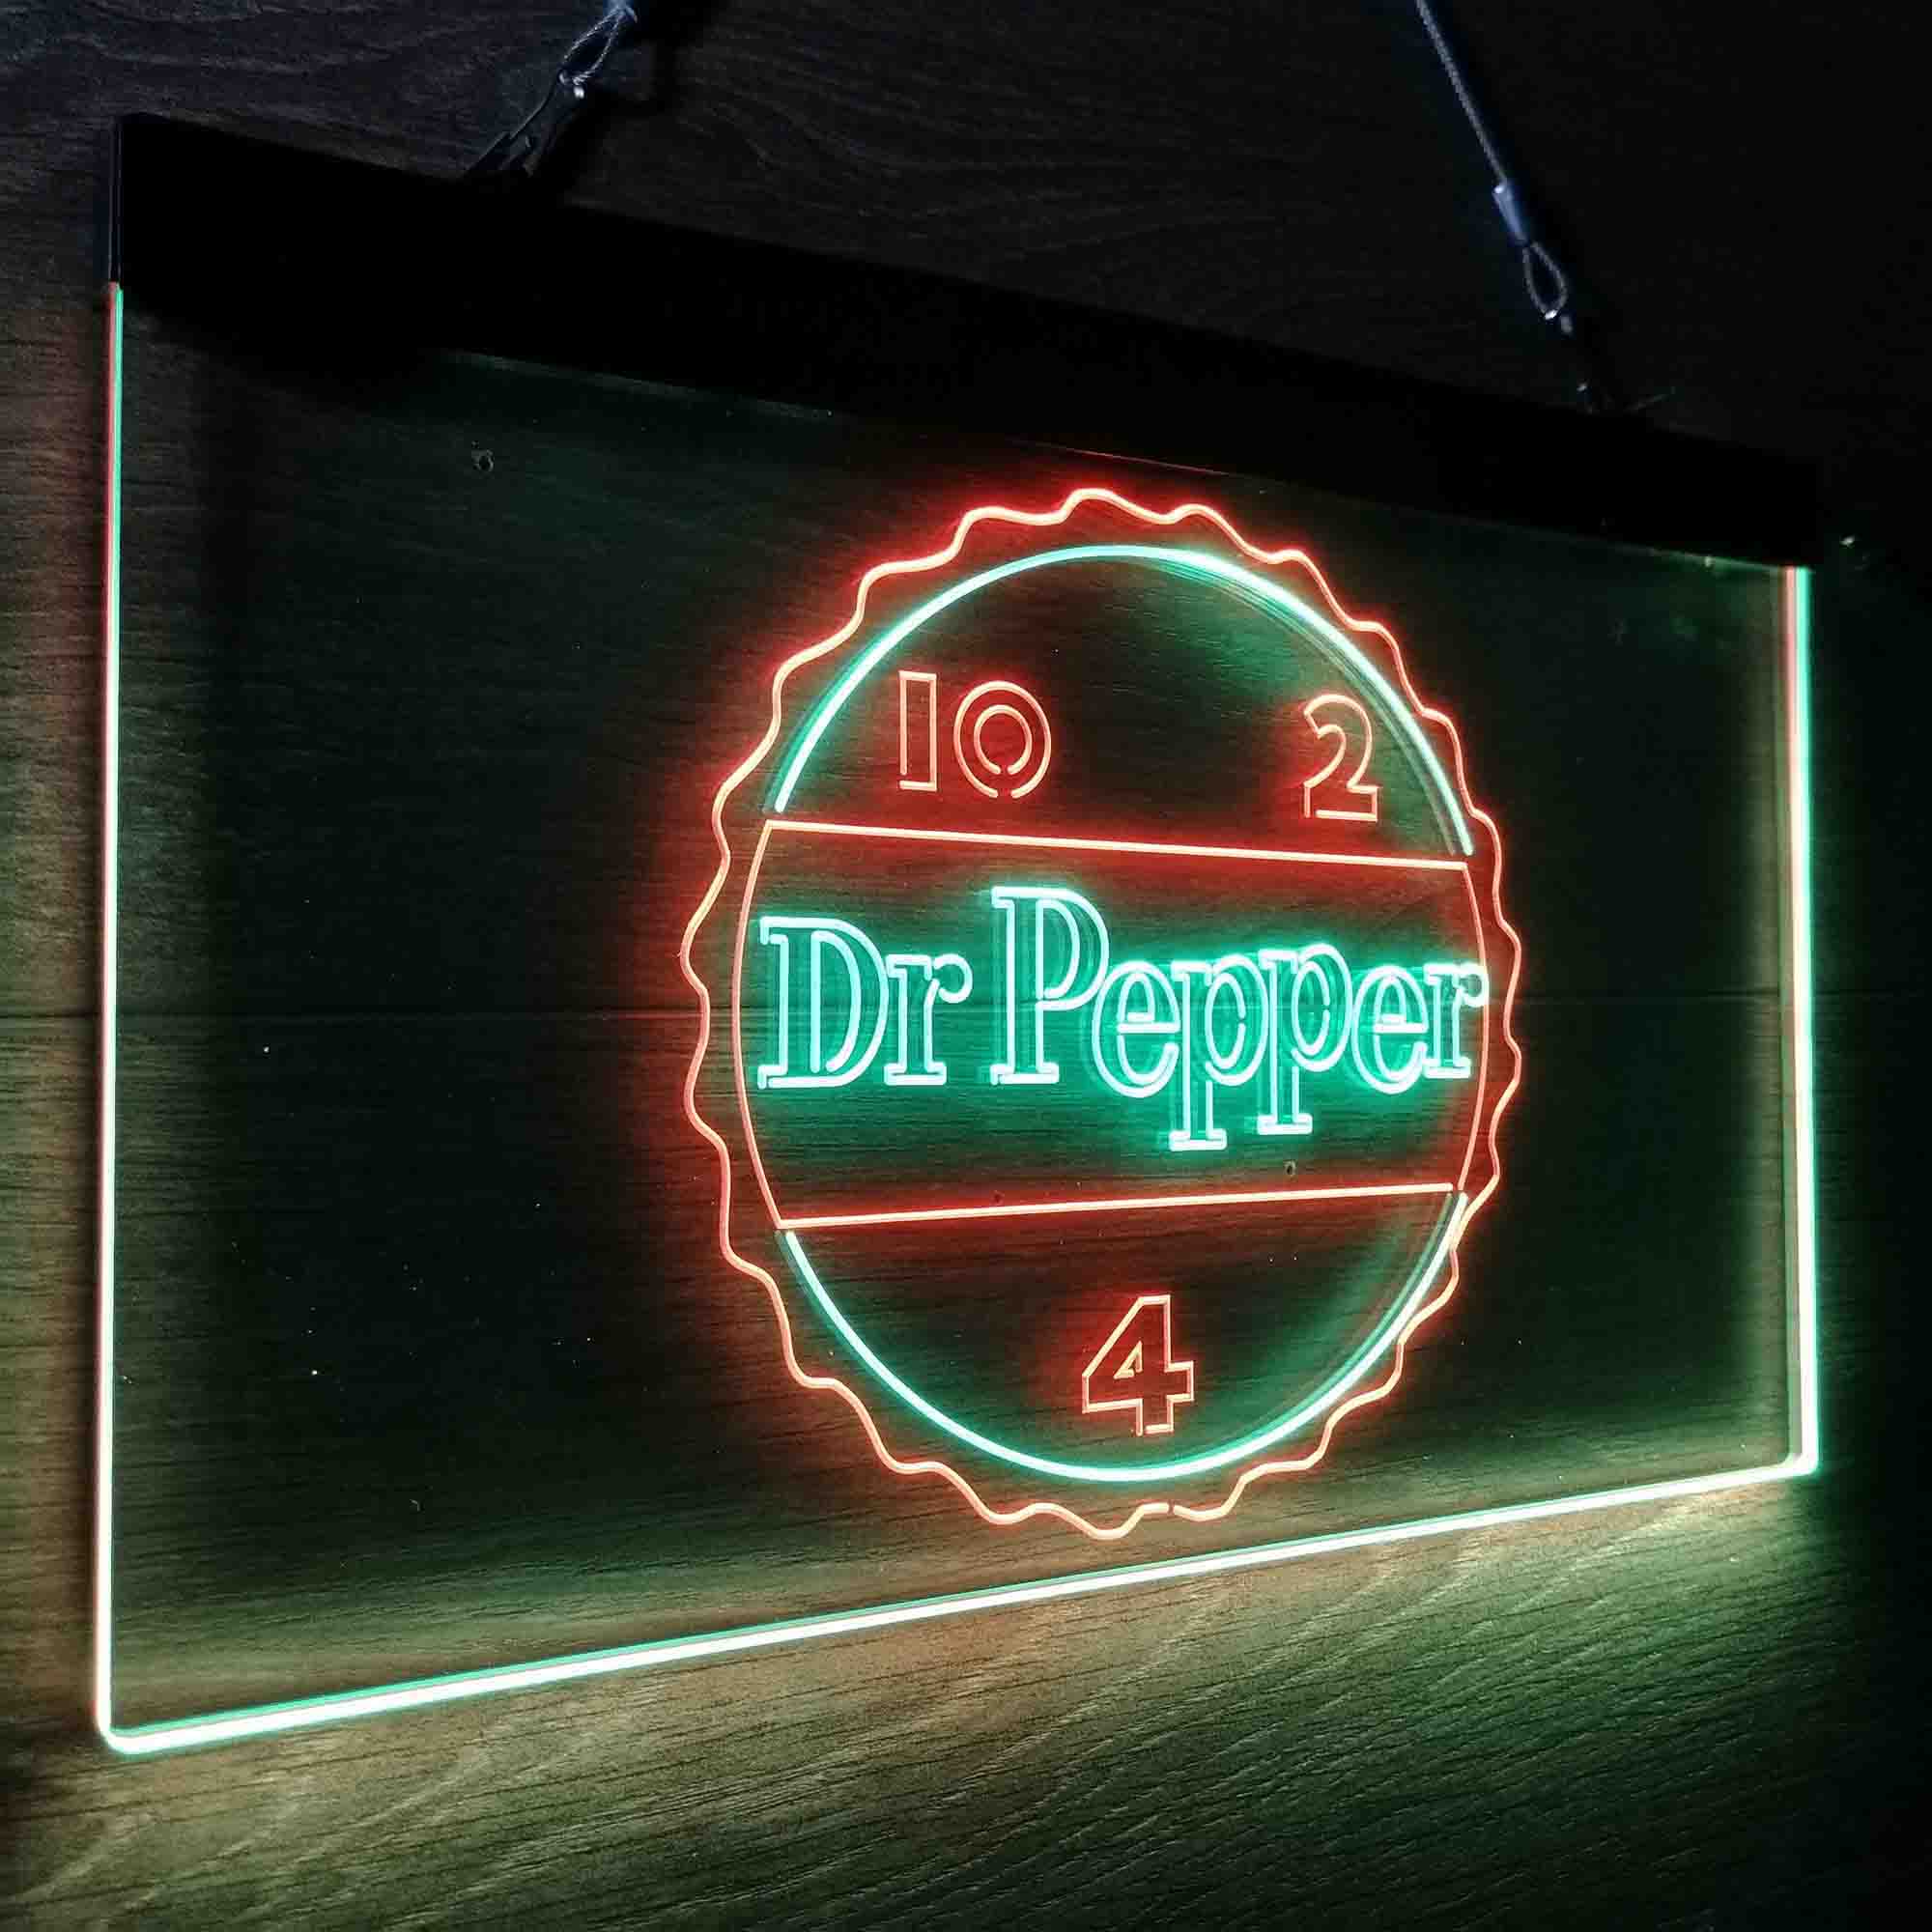 Dr Pepper 10 2 4 Drink Neon-Like LED Sign